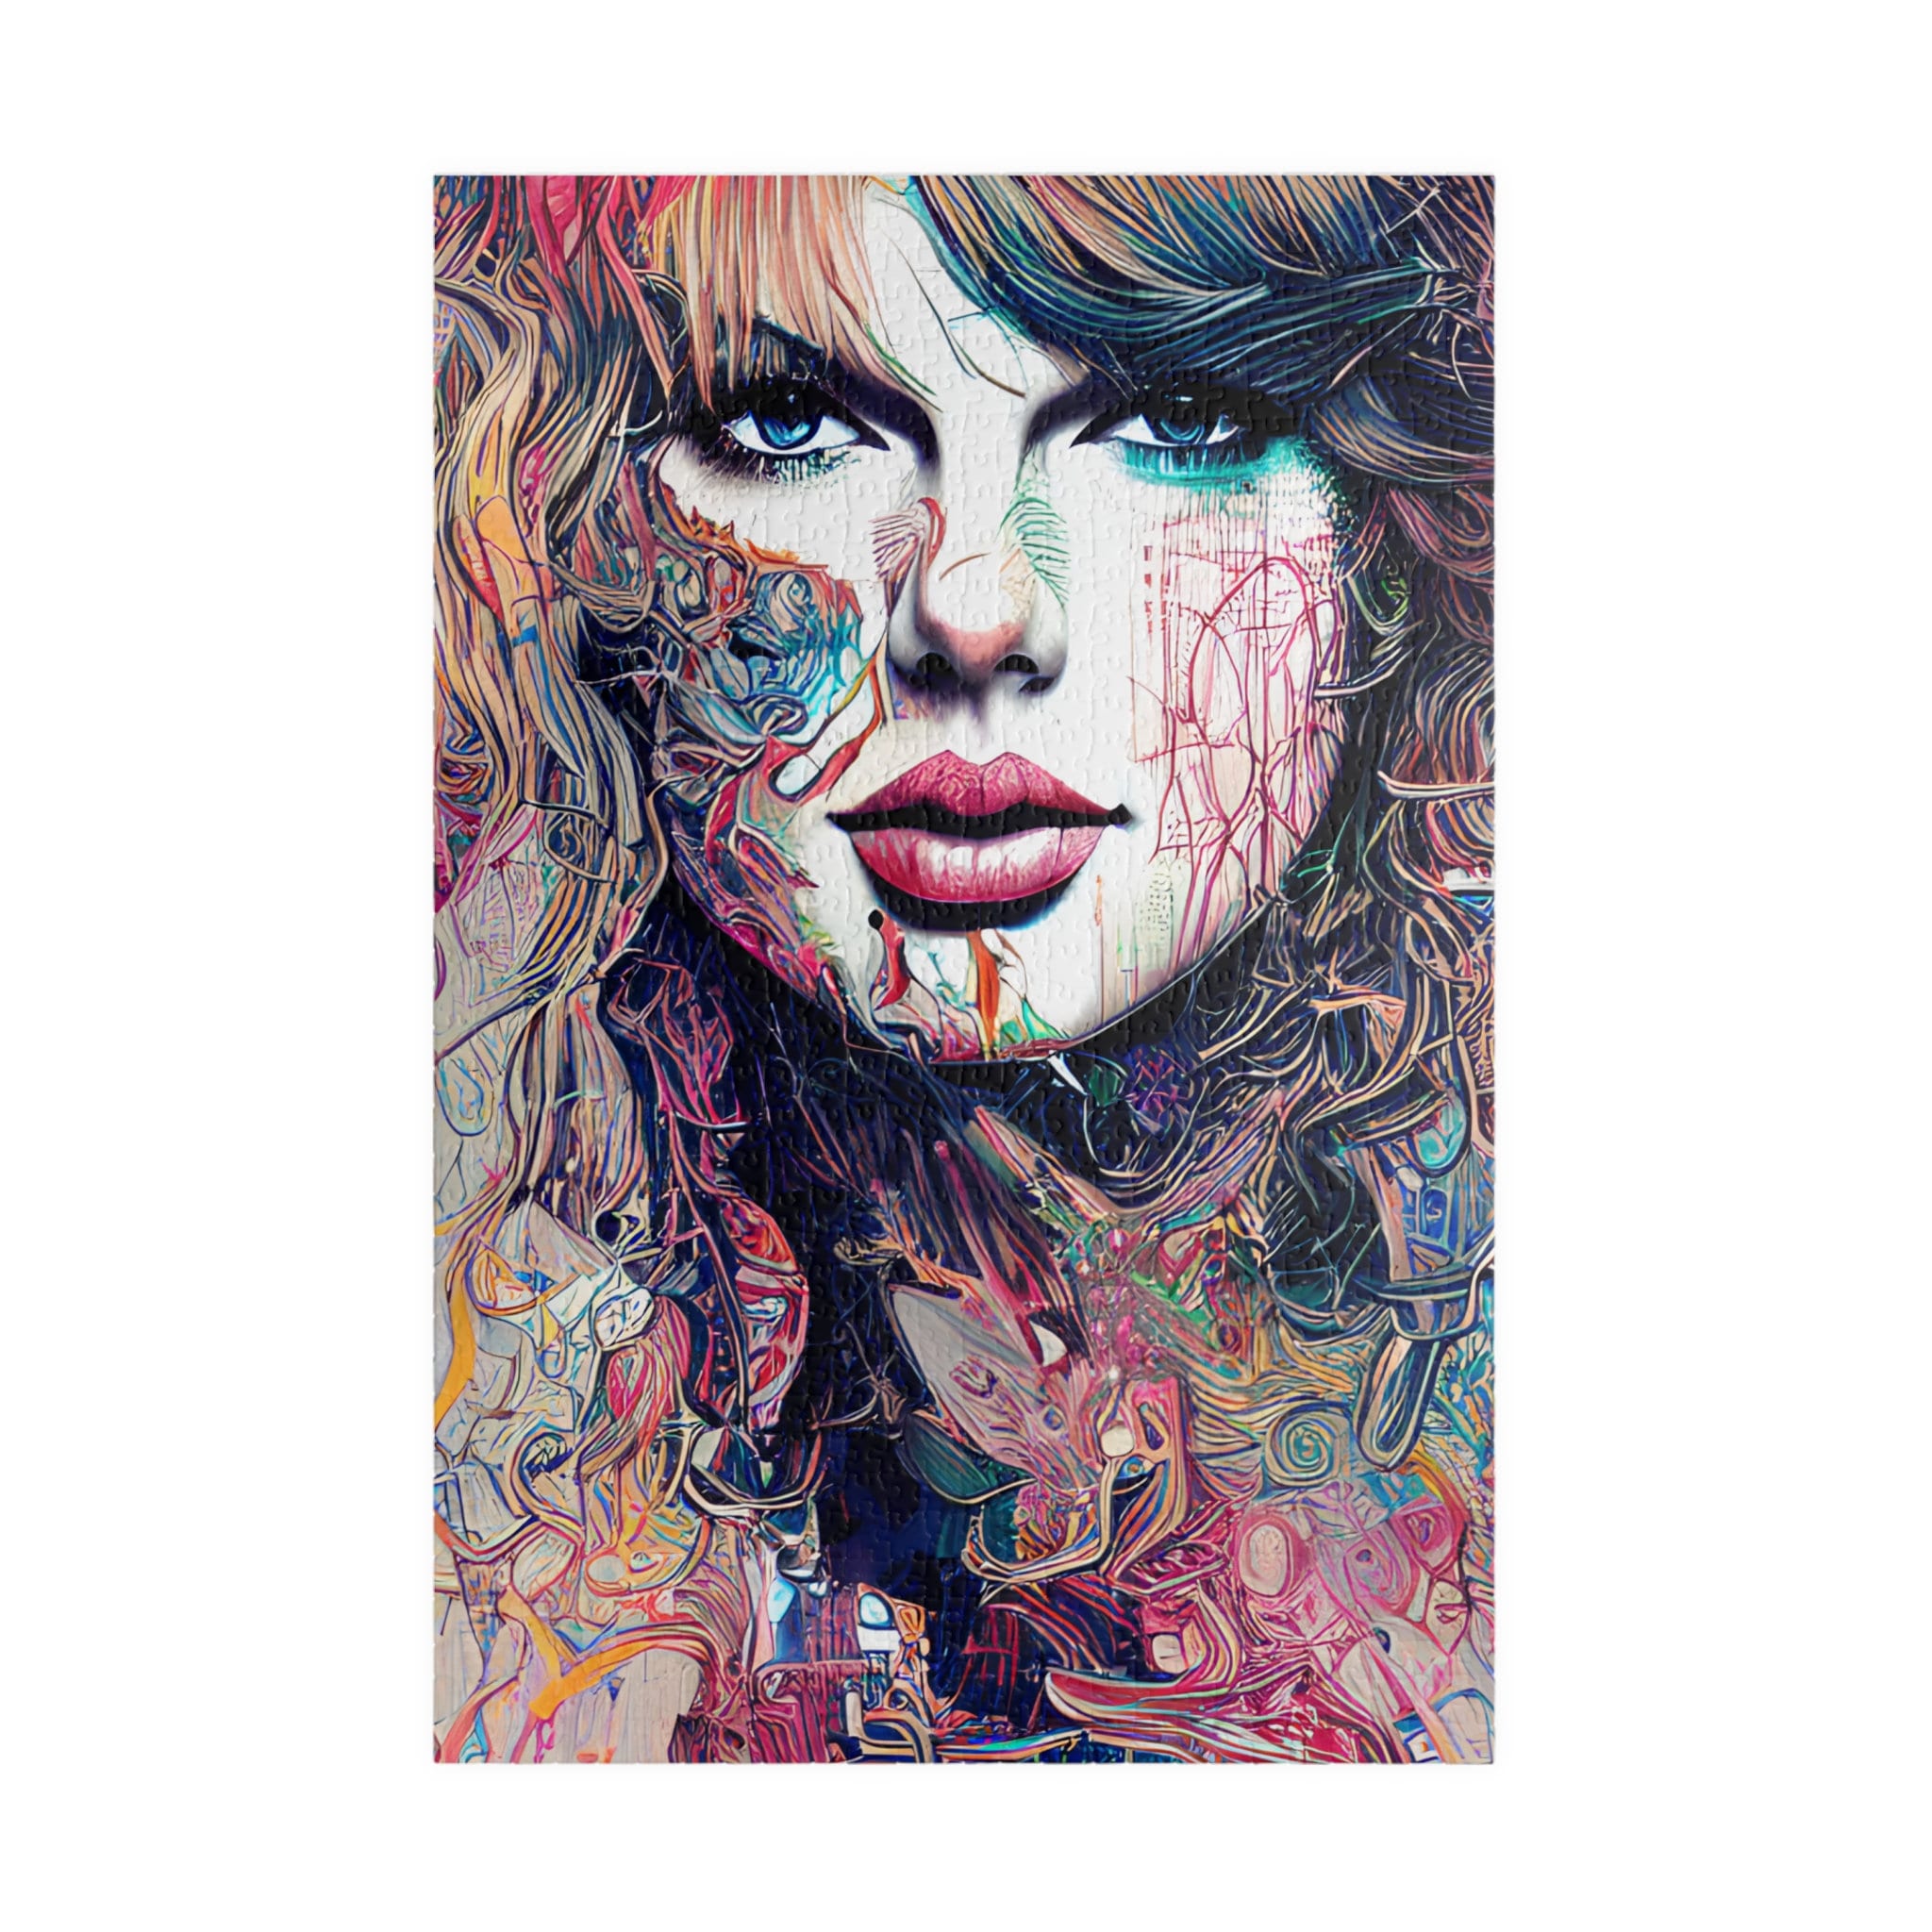 Taylor Swift 4 Mock Jigsaw Puzzle – CA Go Canvas